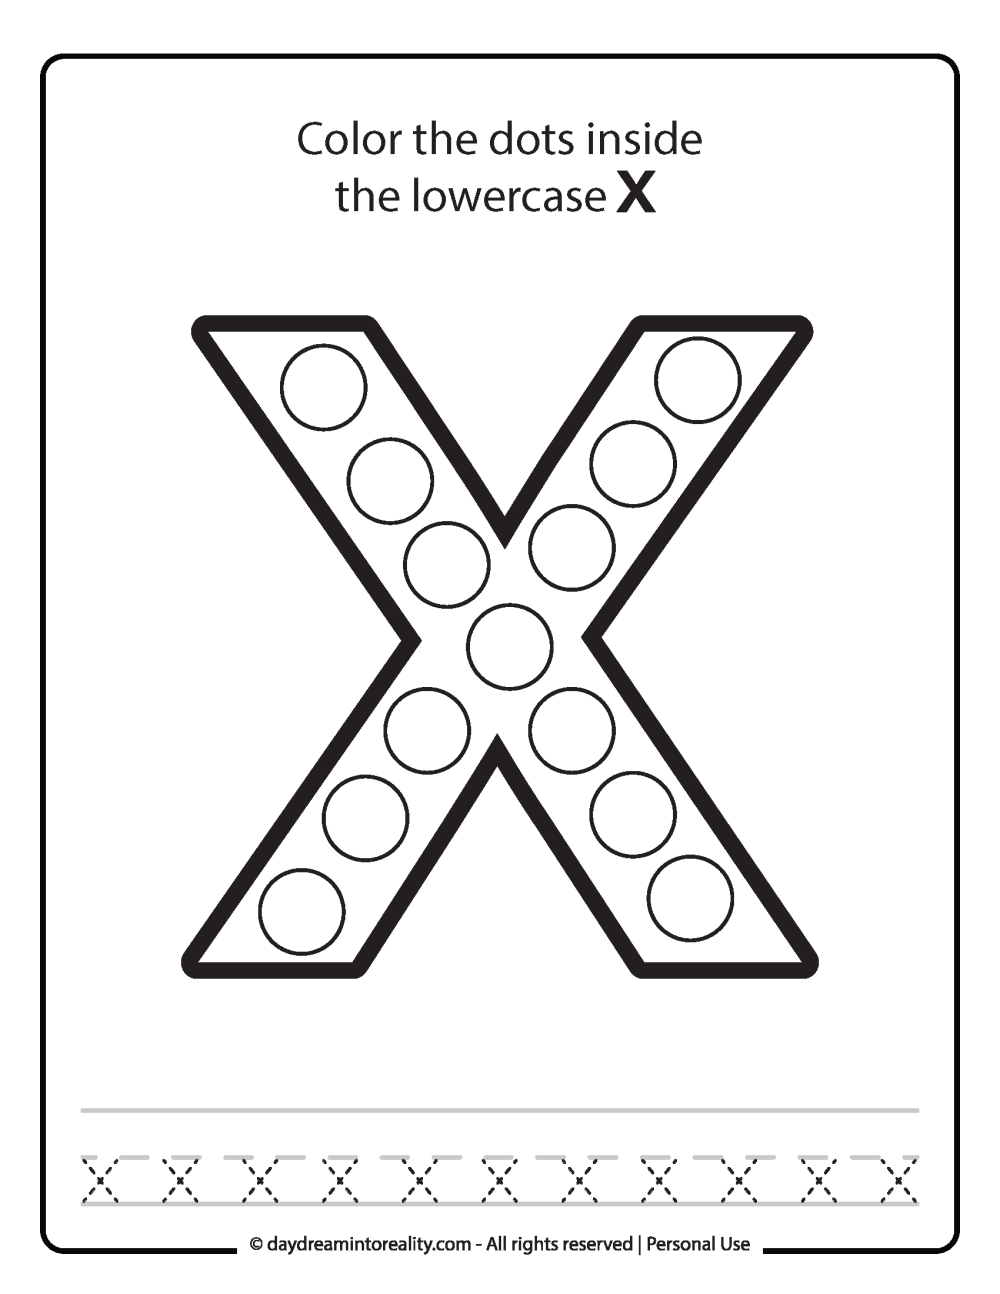 Lowercase "x" Dot Marker Worksheet Free Printable activity for kids (preschool, kindergarten)